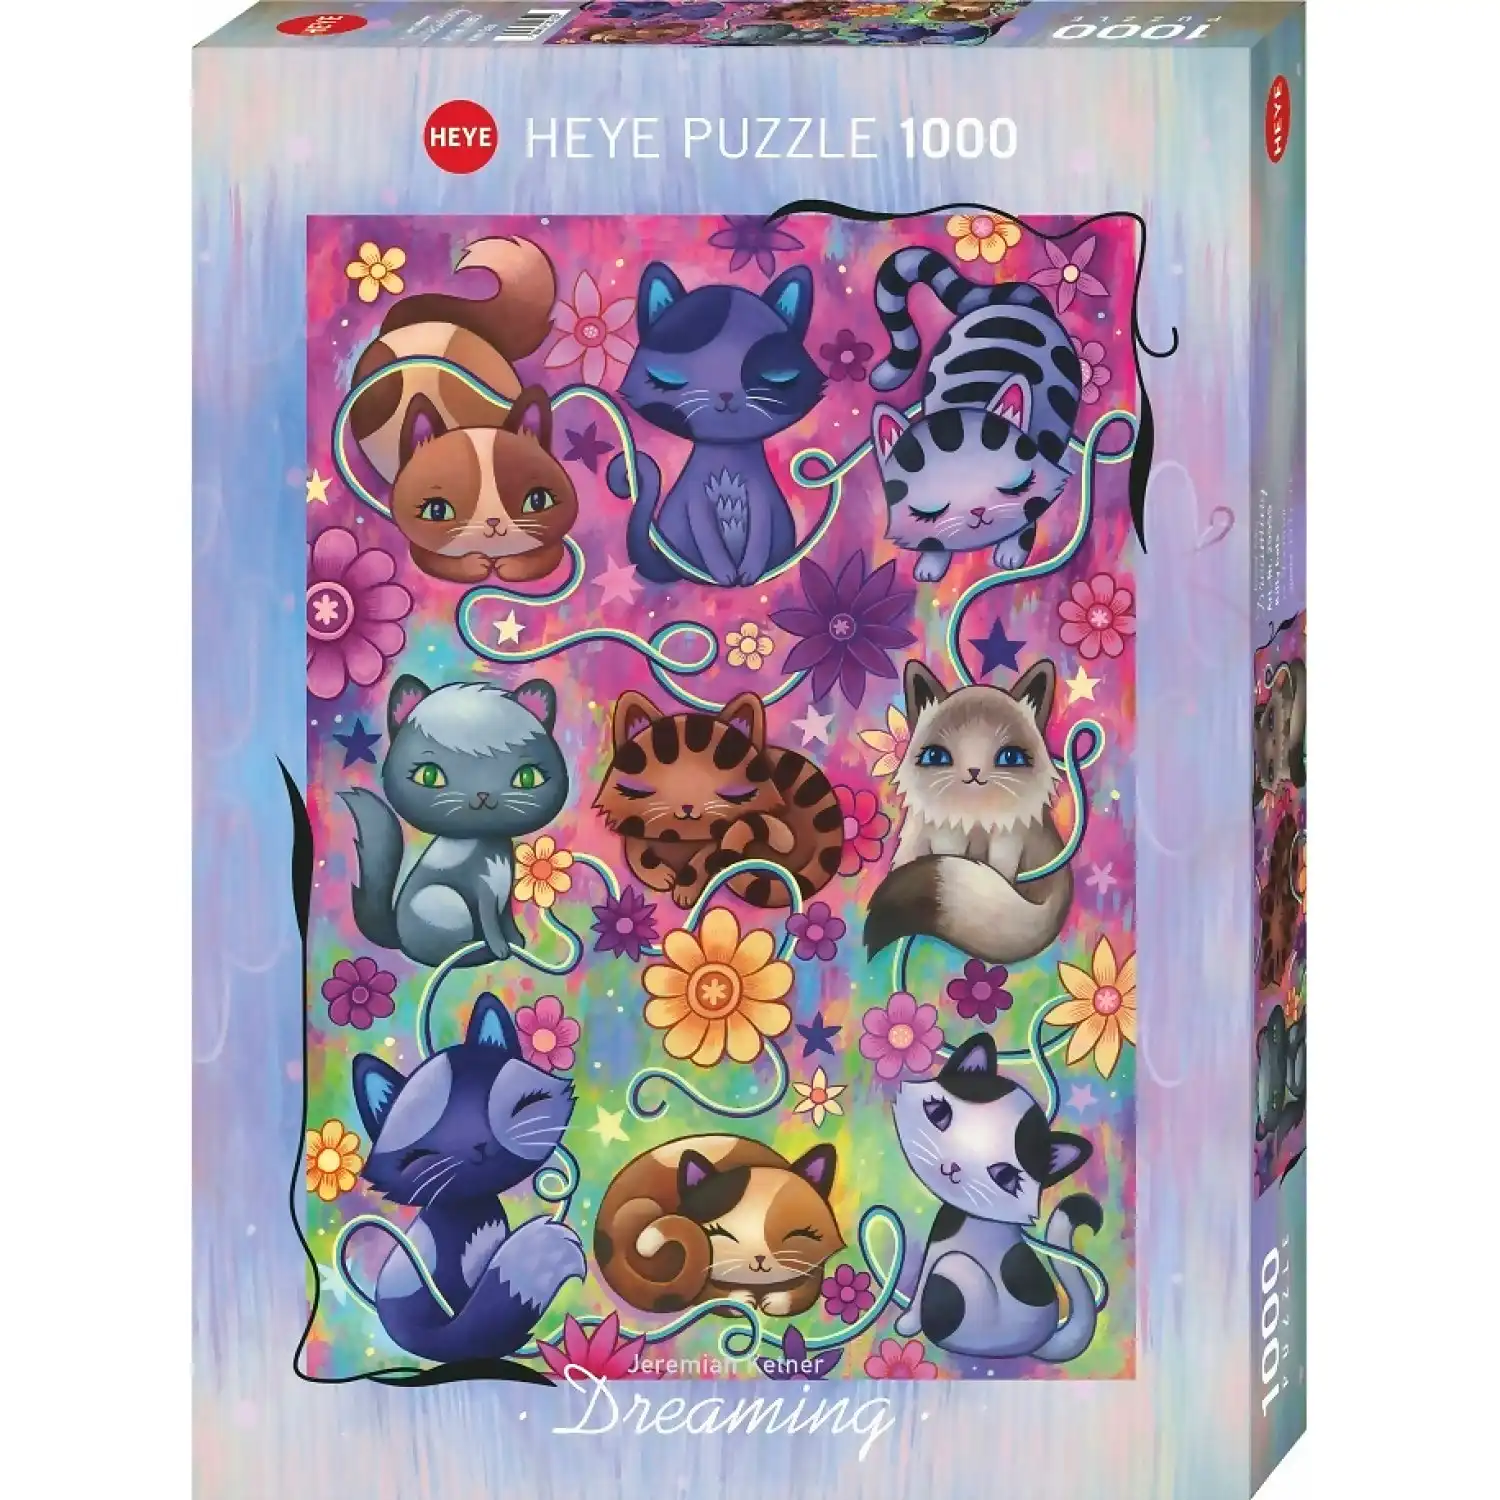 Heye - Dreaming Kitty Cats Jigsaw Puzzle 1000pc